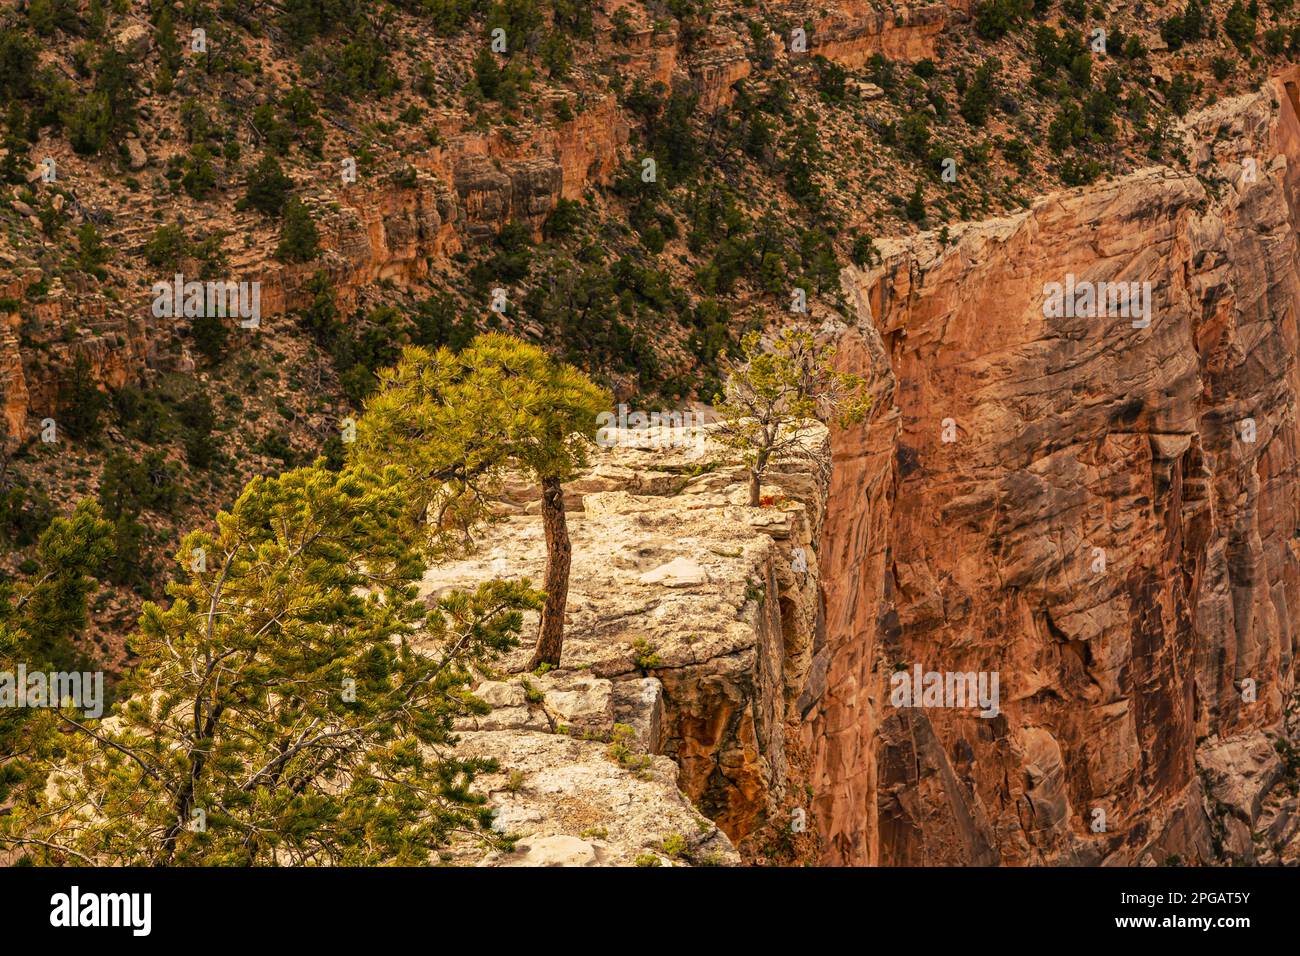 Grand Canyon National Park in Arizona, USA. South Rim of the Grand Canyon National Park Stock Photo